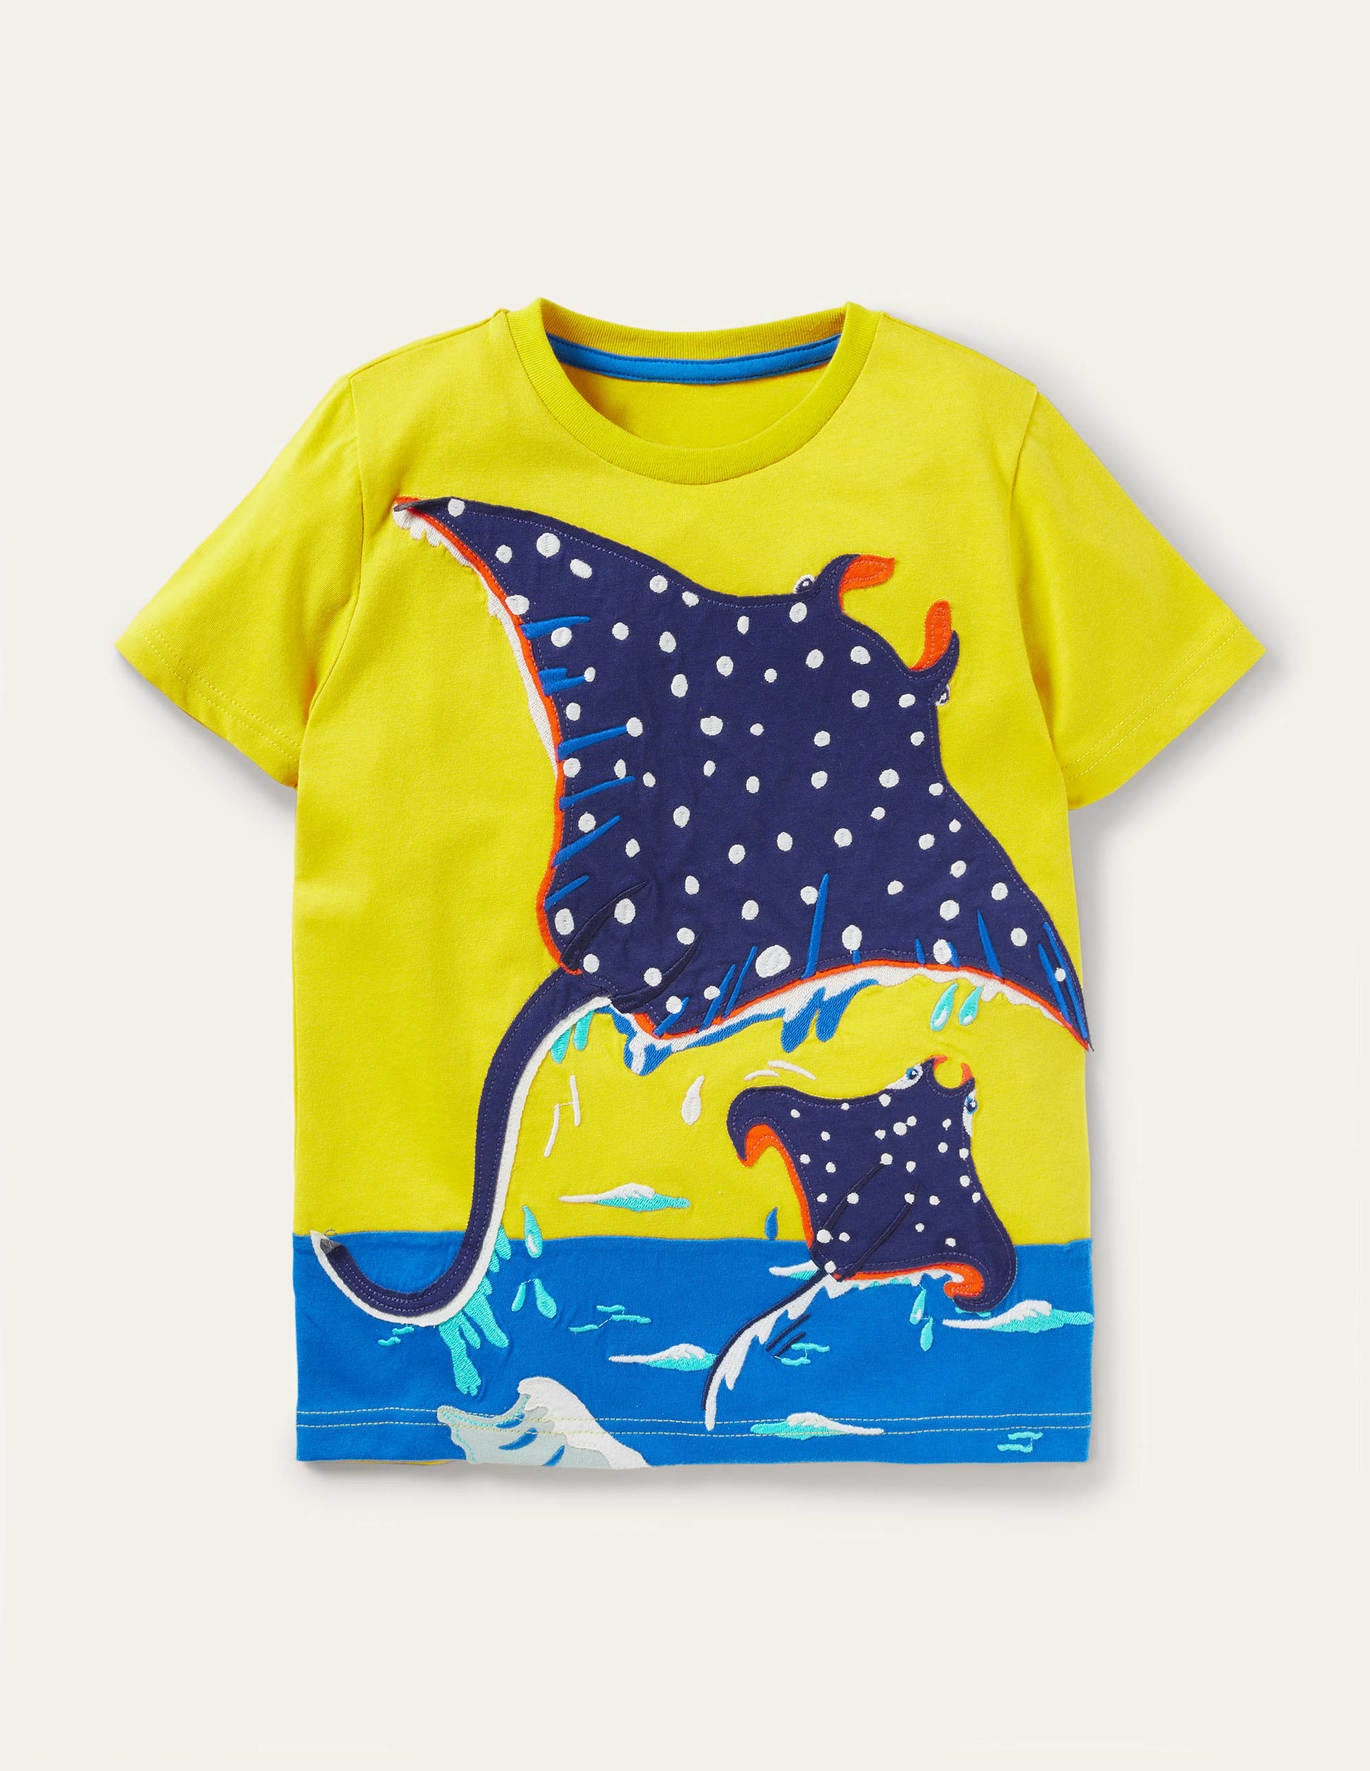 Boden Underwater Animal T-shirt - Maximillion Yellow Mantaray